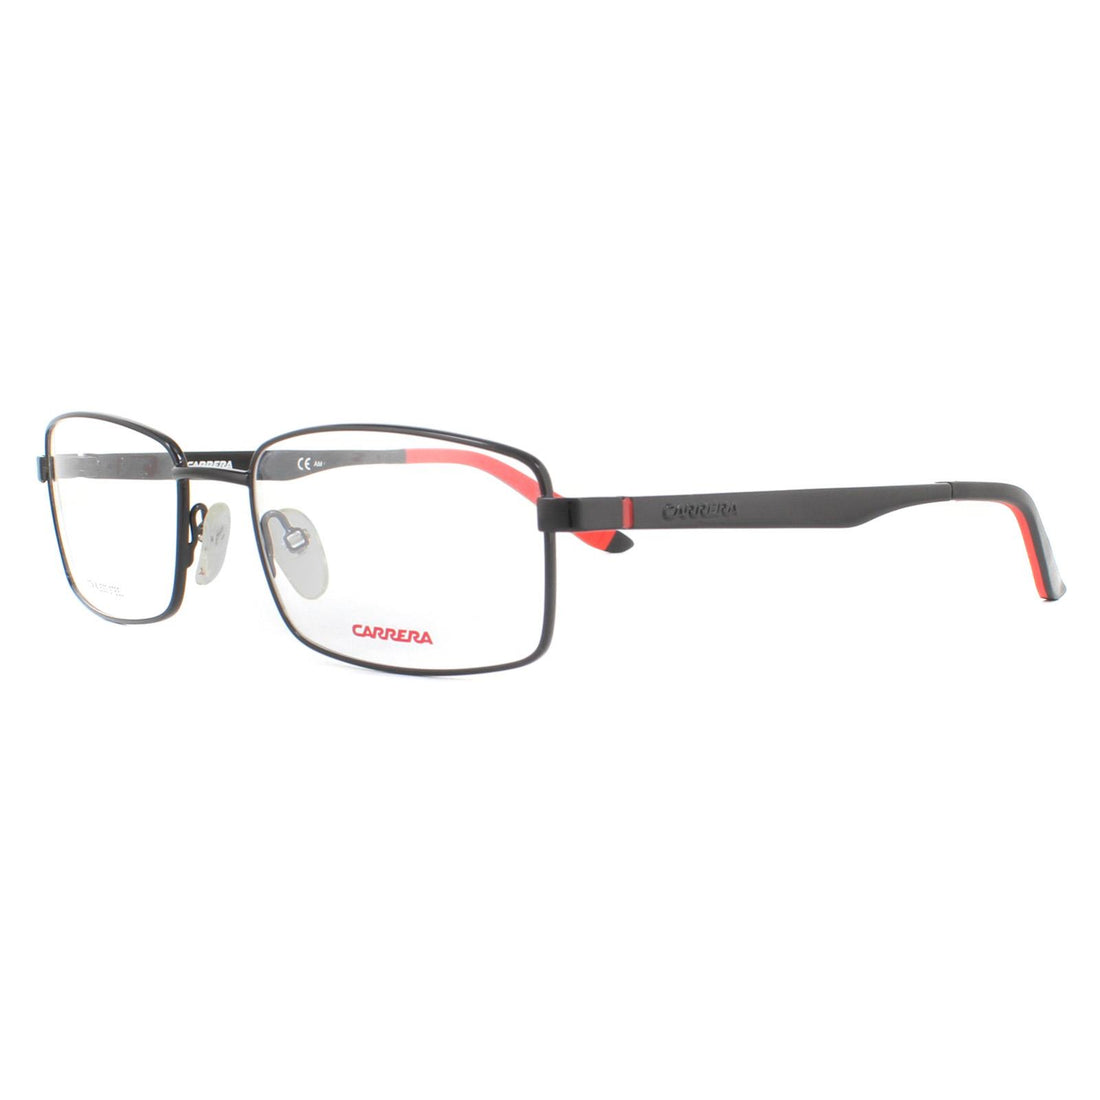 Carrera Glasses Frames 8812 006 Shiny Black Men